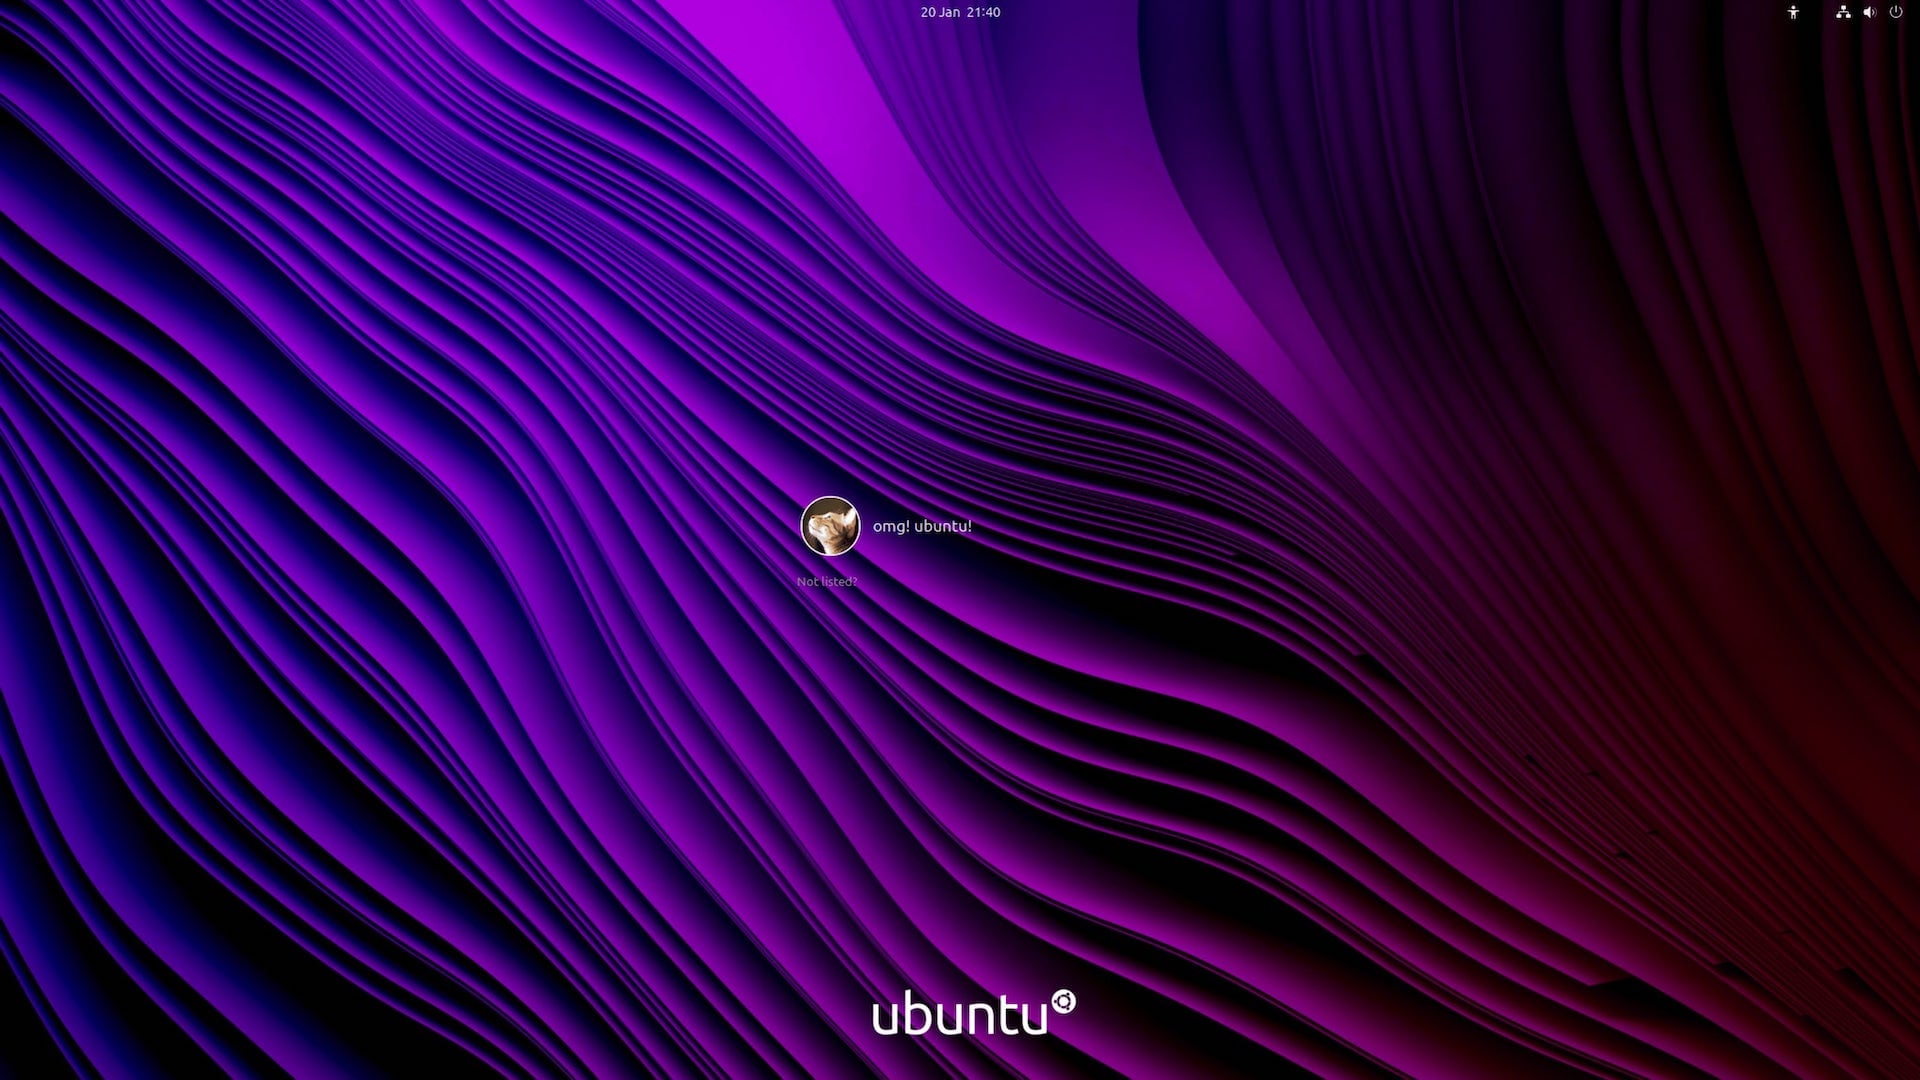 a screenshot of the ubuntu login screen (GDM) using a custom image